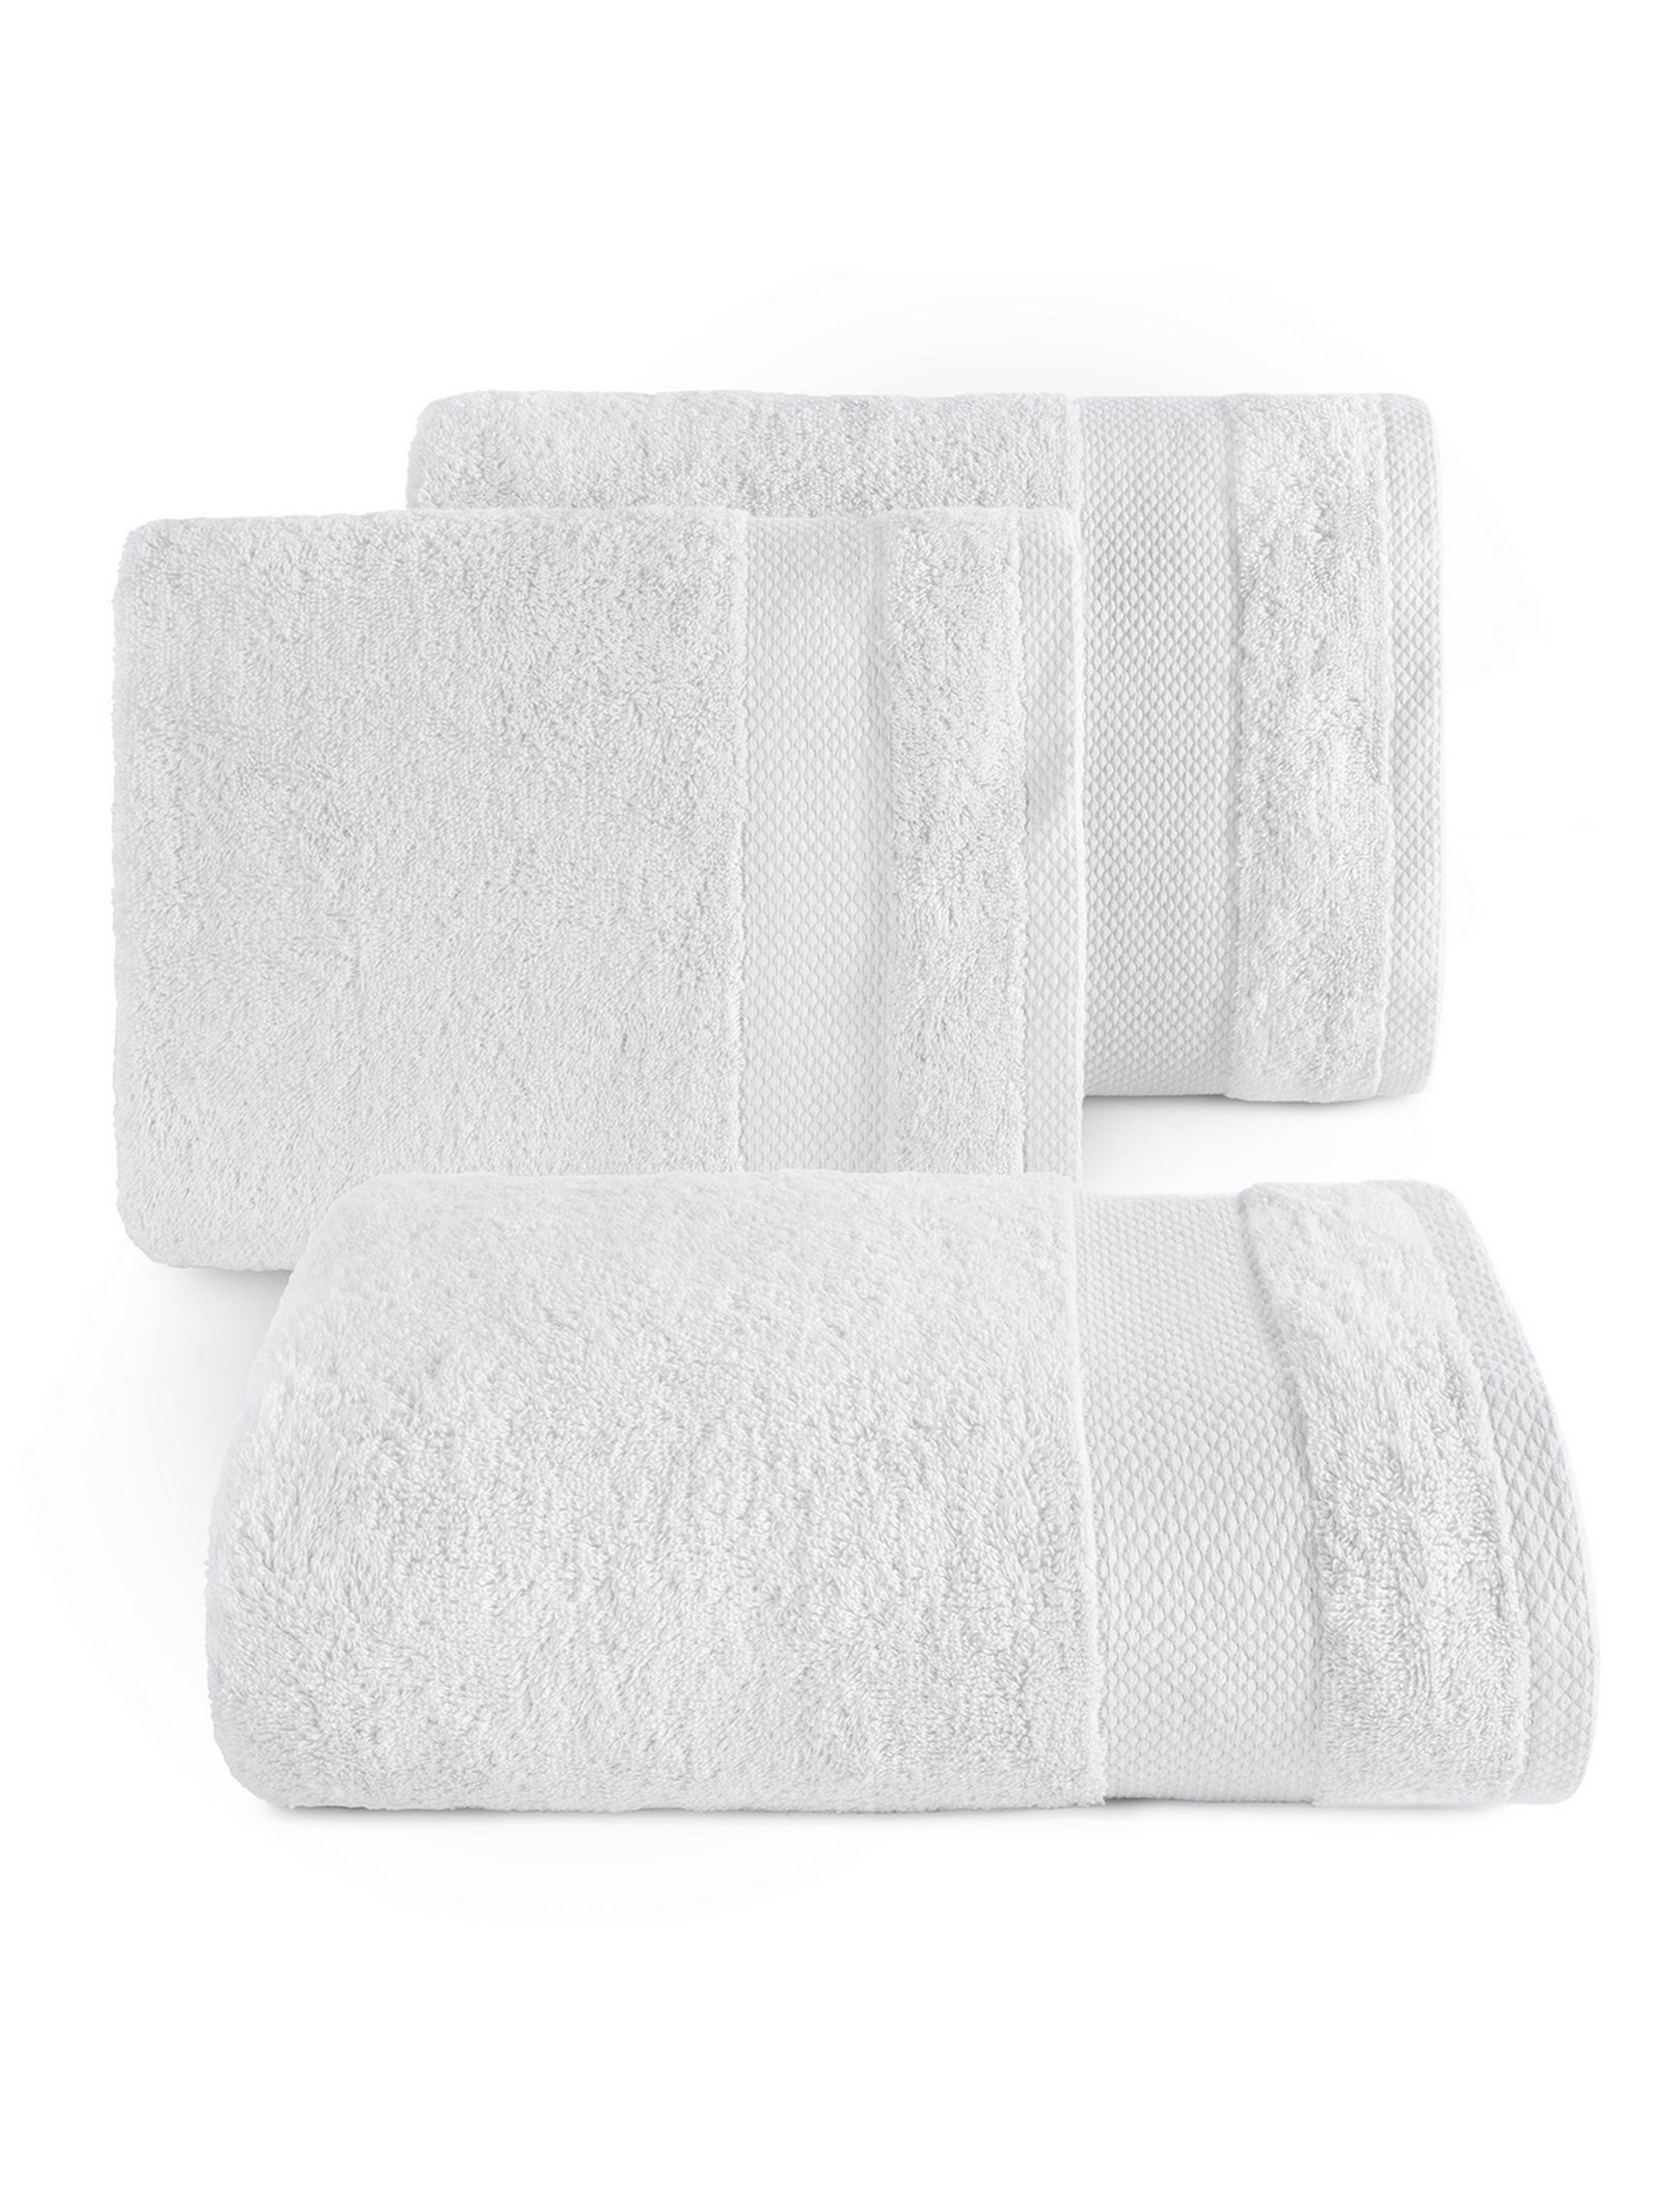 Ręcznik lorita (01) 50x90 cm biały